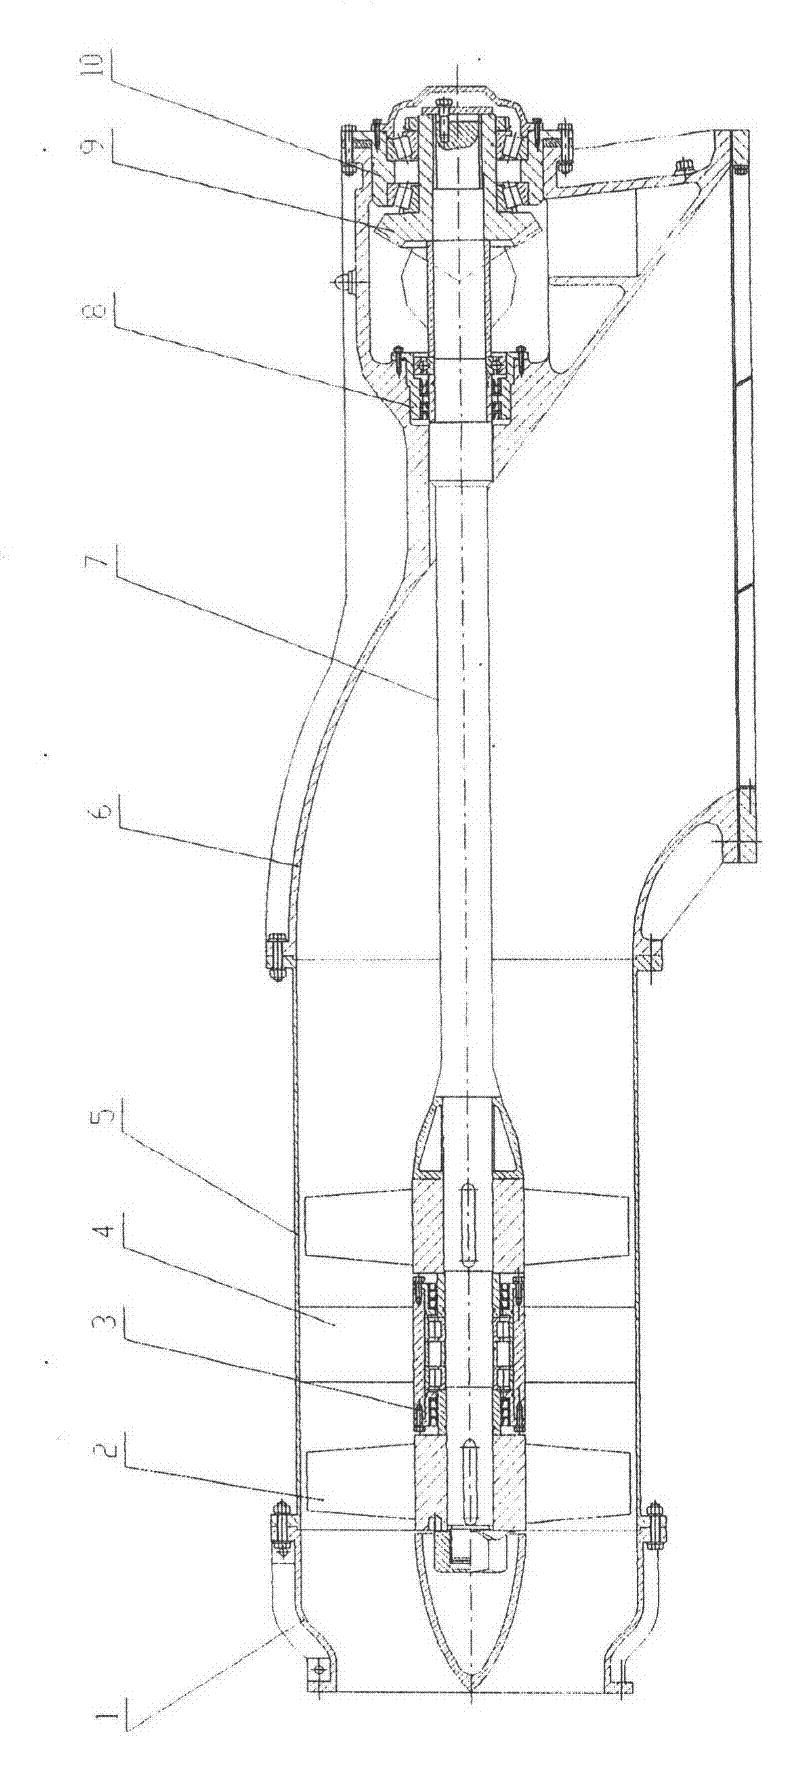 An axial flow water jet propulsion pump